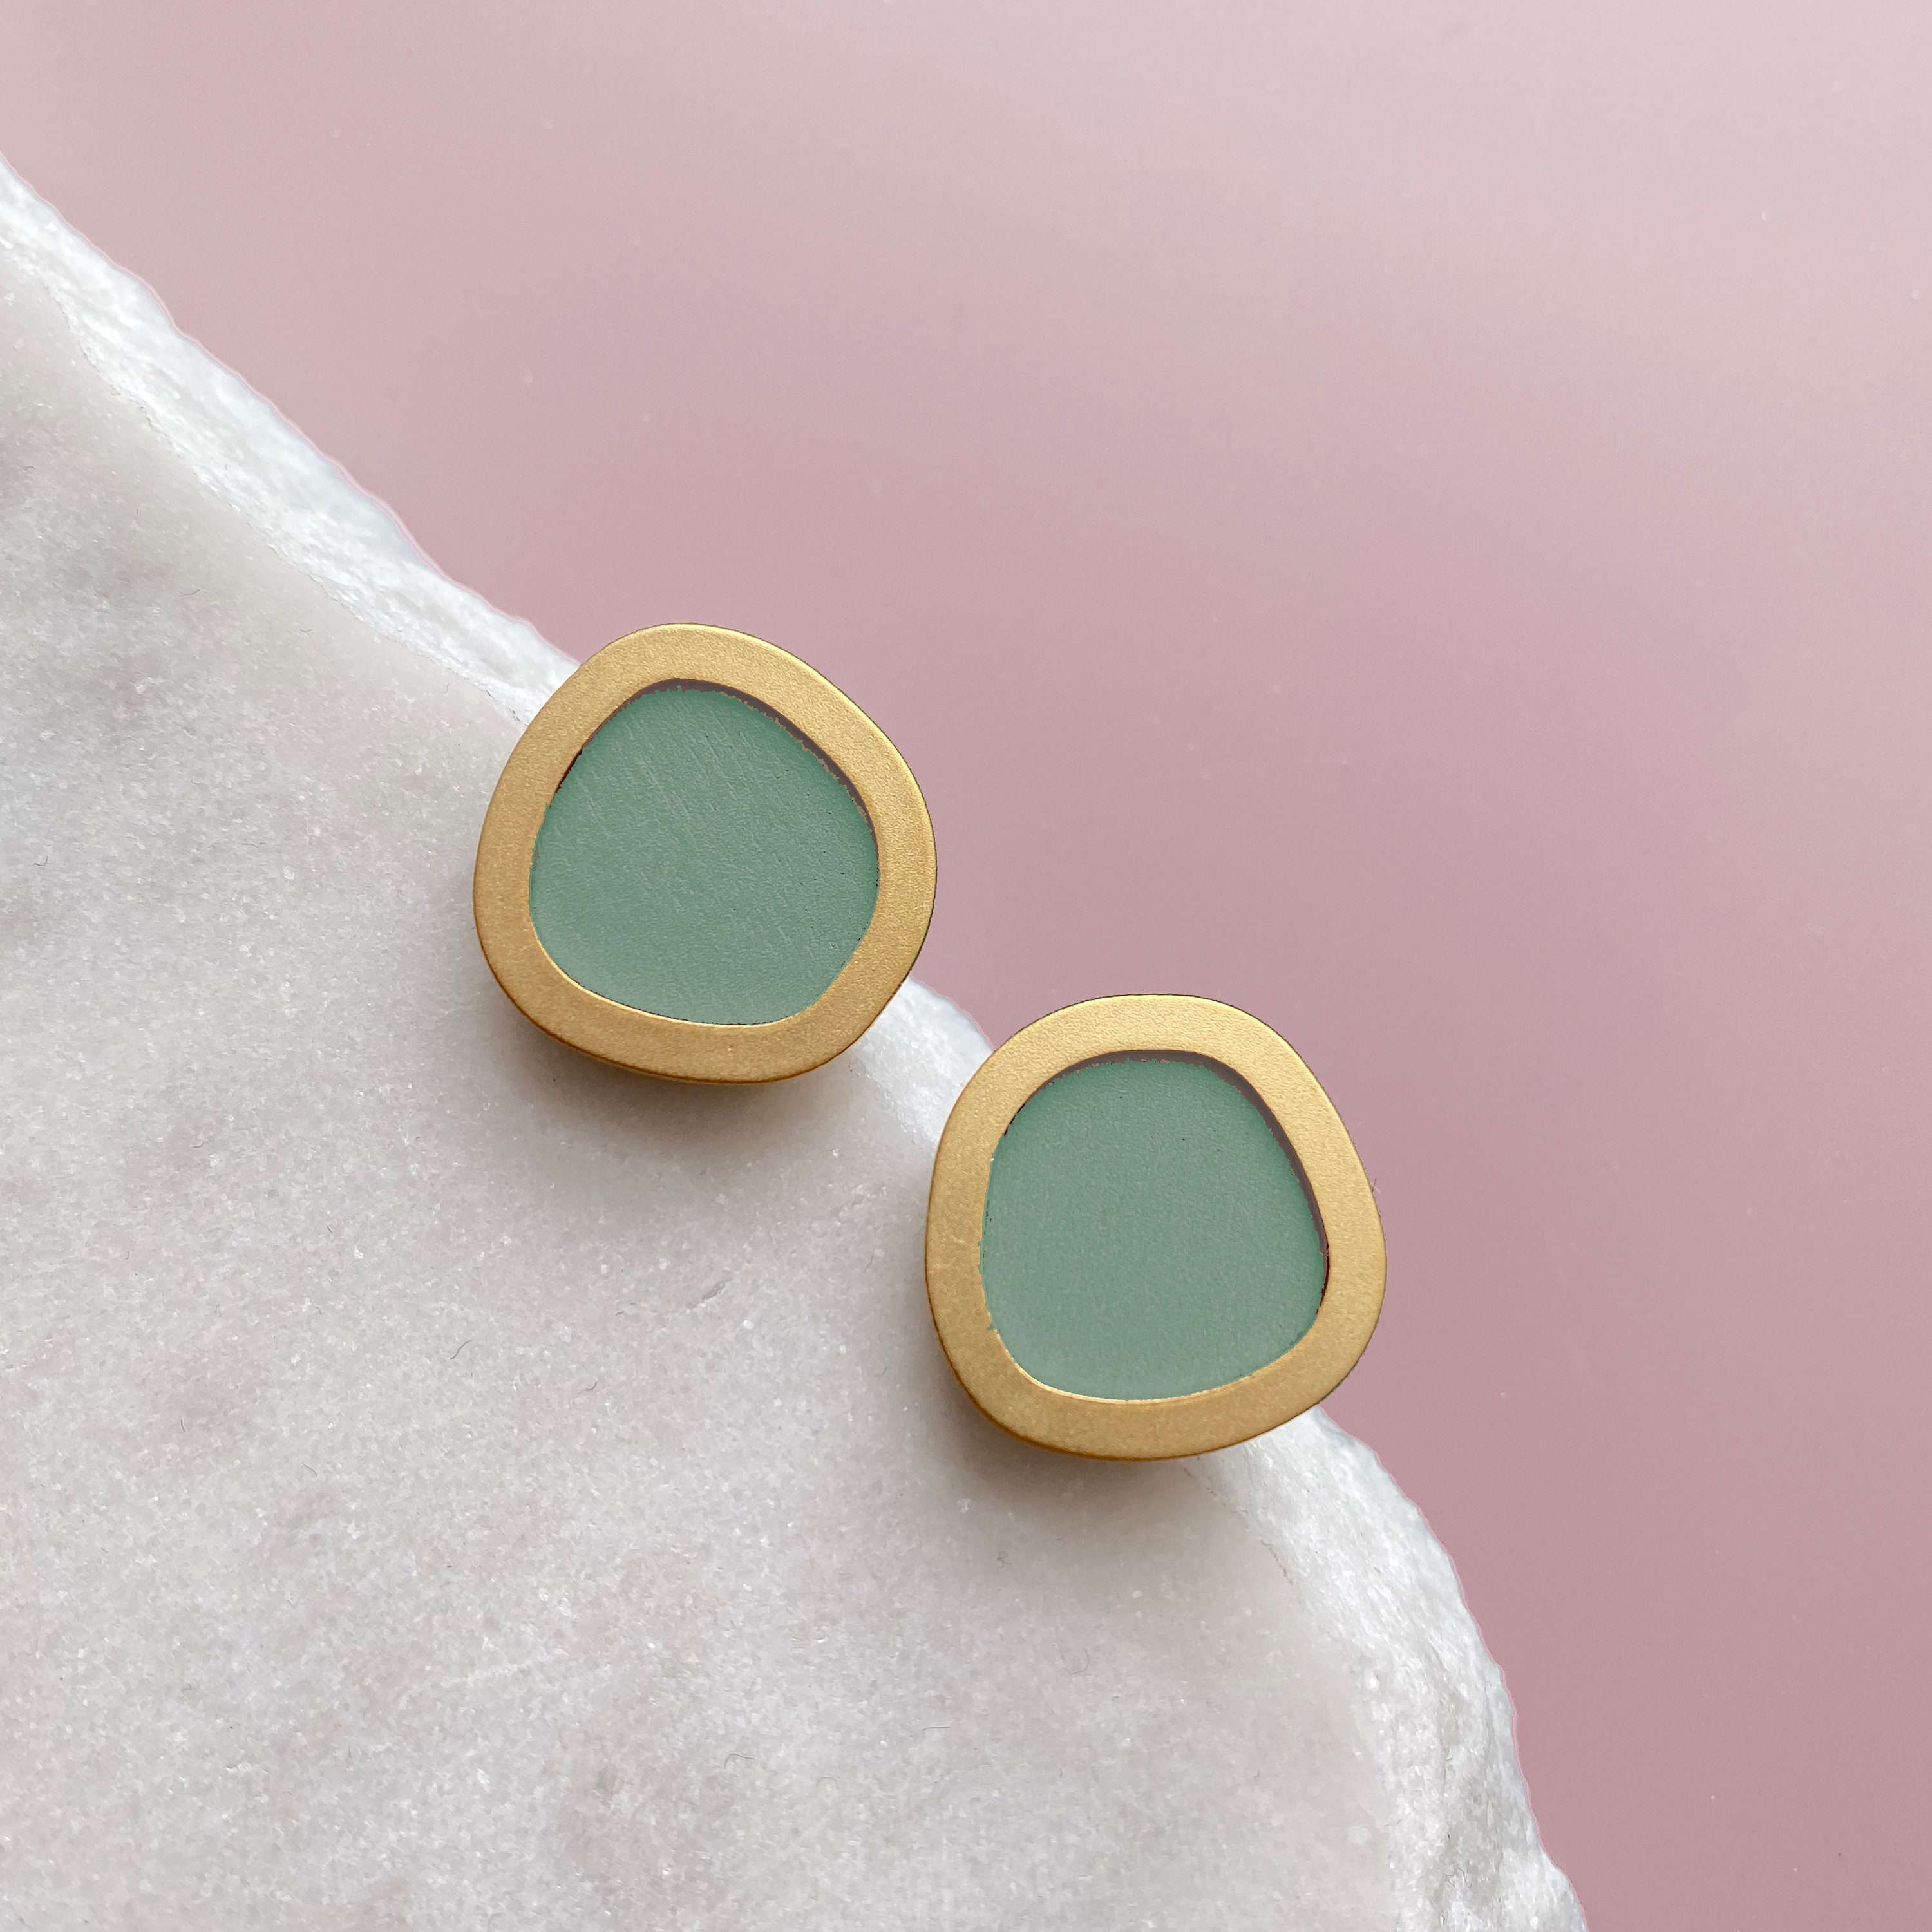 Mint & Gold Geometric Circle Stud Earrings - Simple Round Minimal